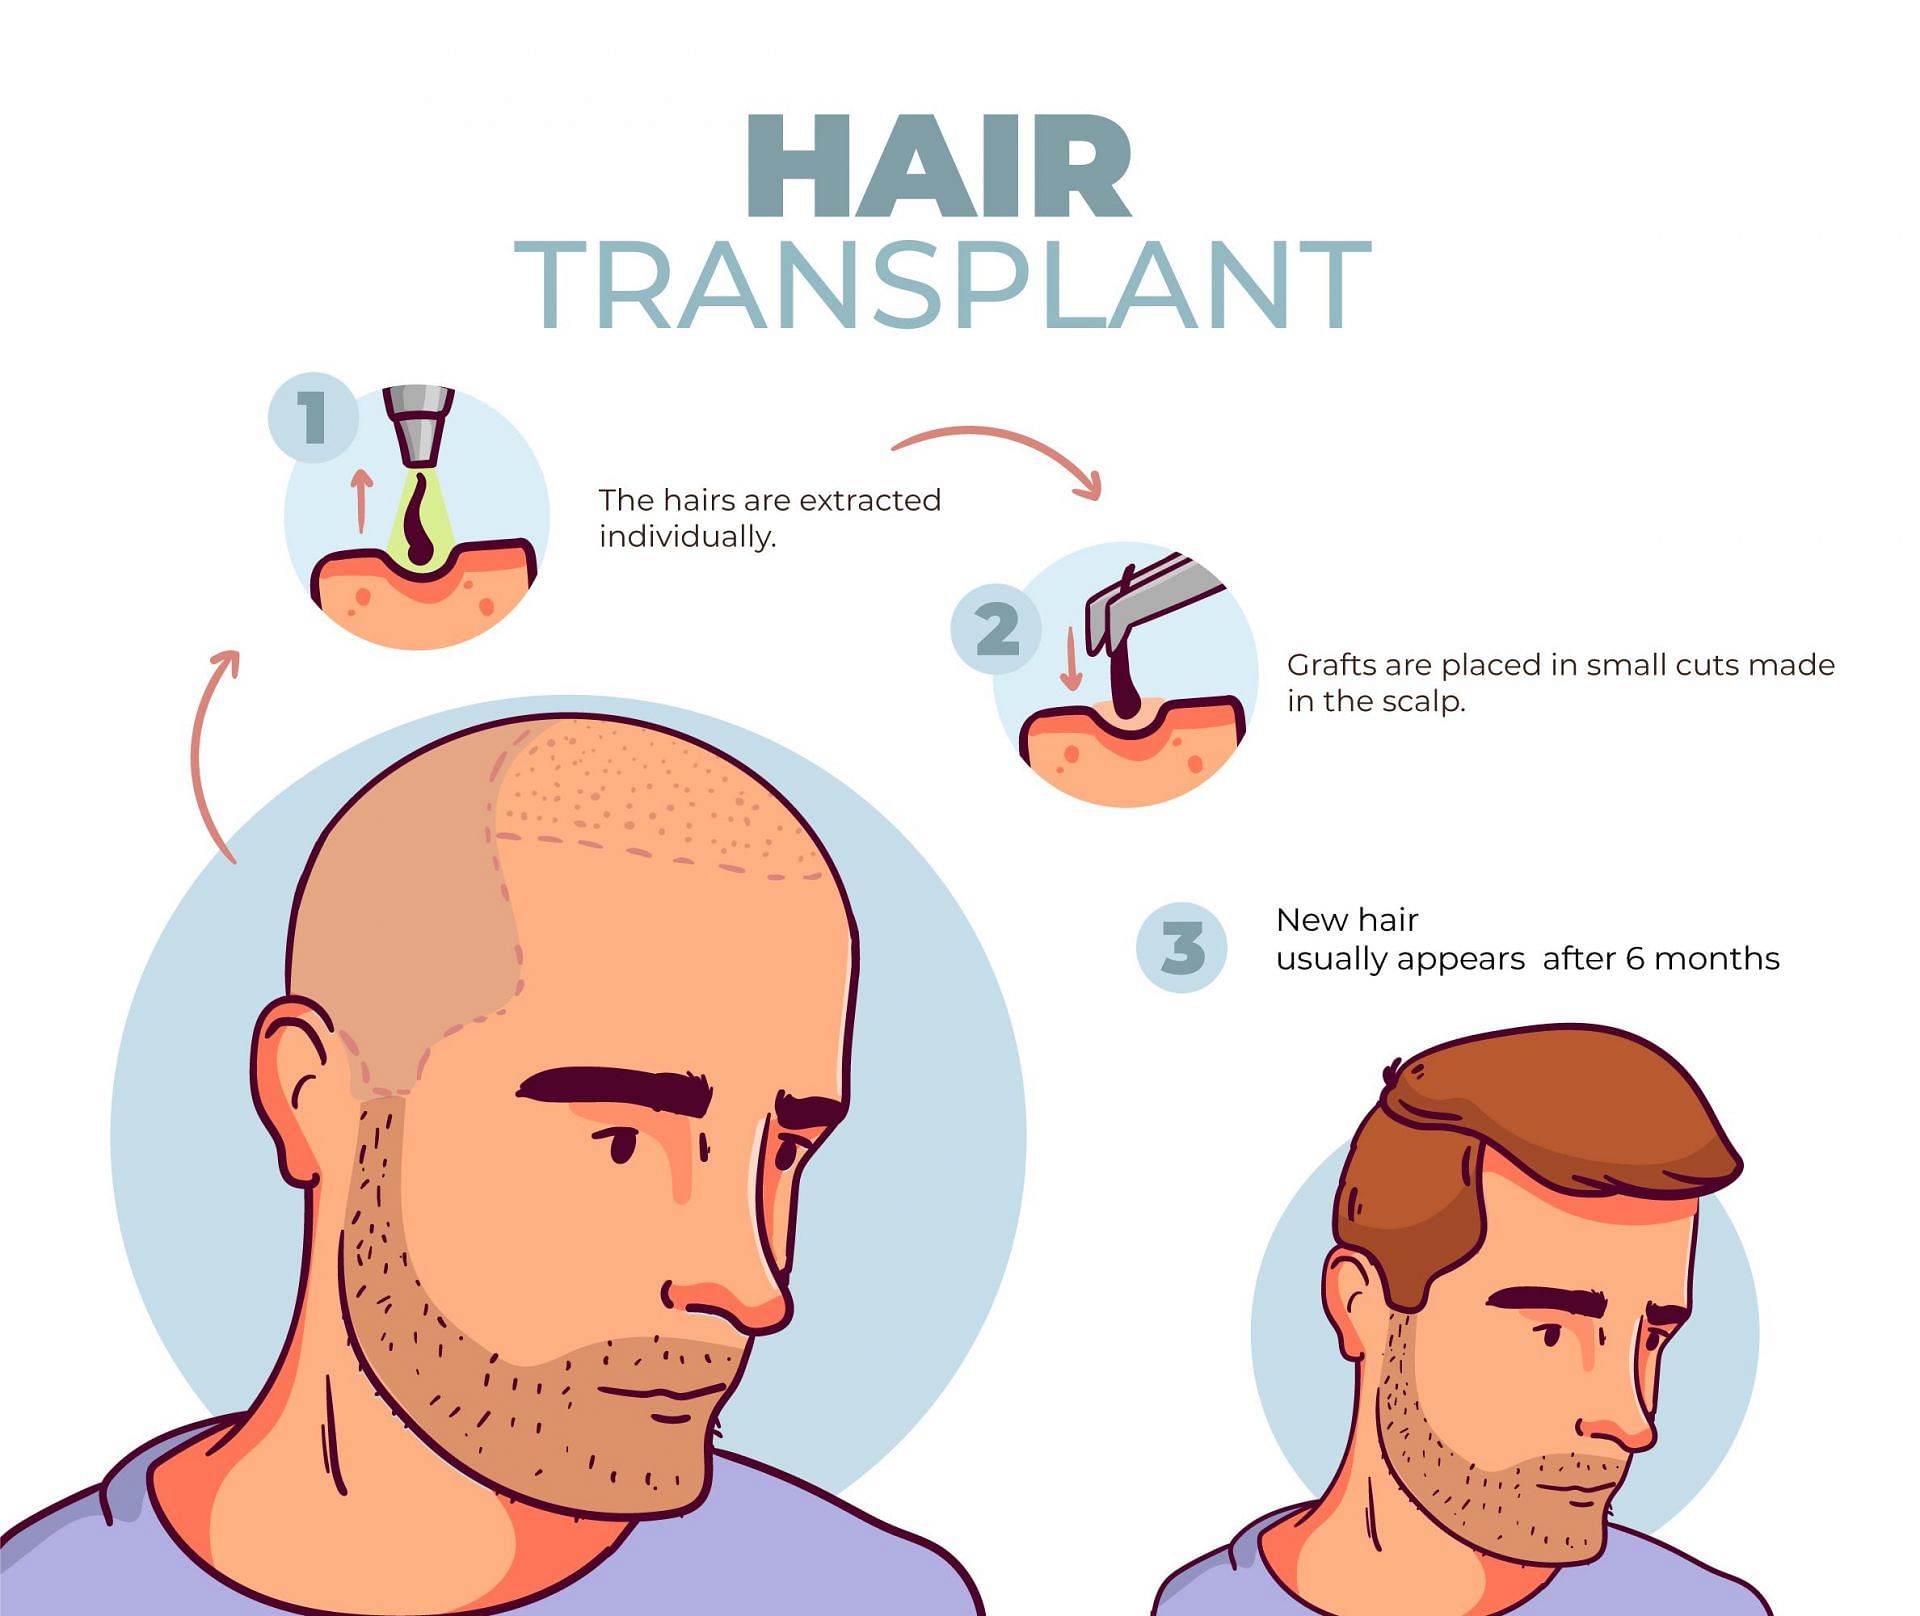 hair transplantation procedure. (image via freepik)